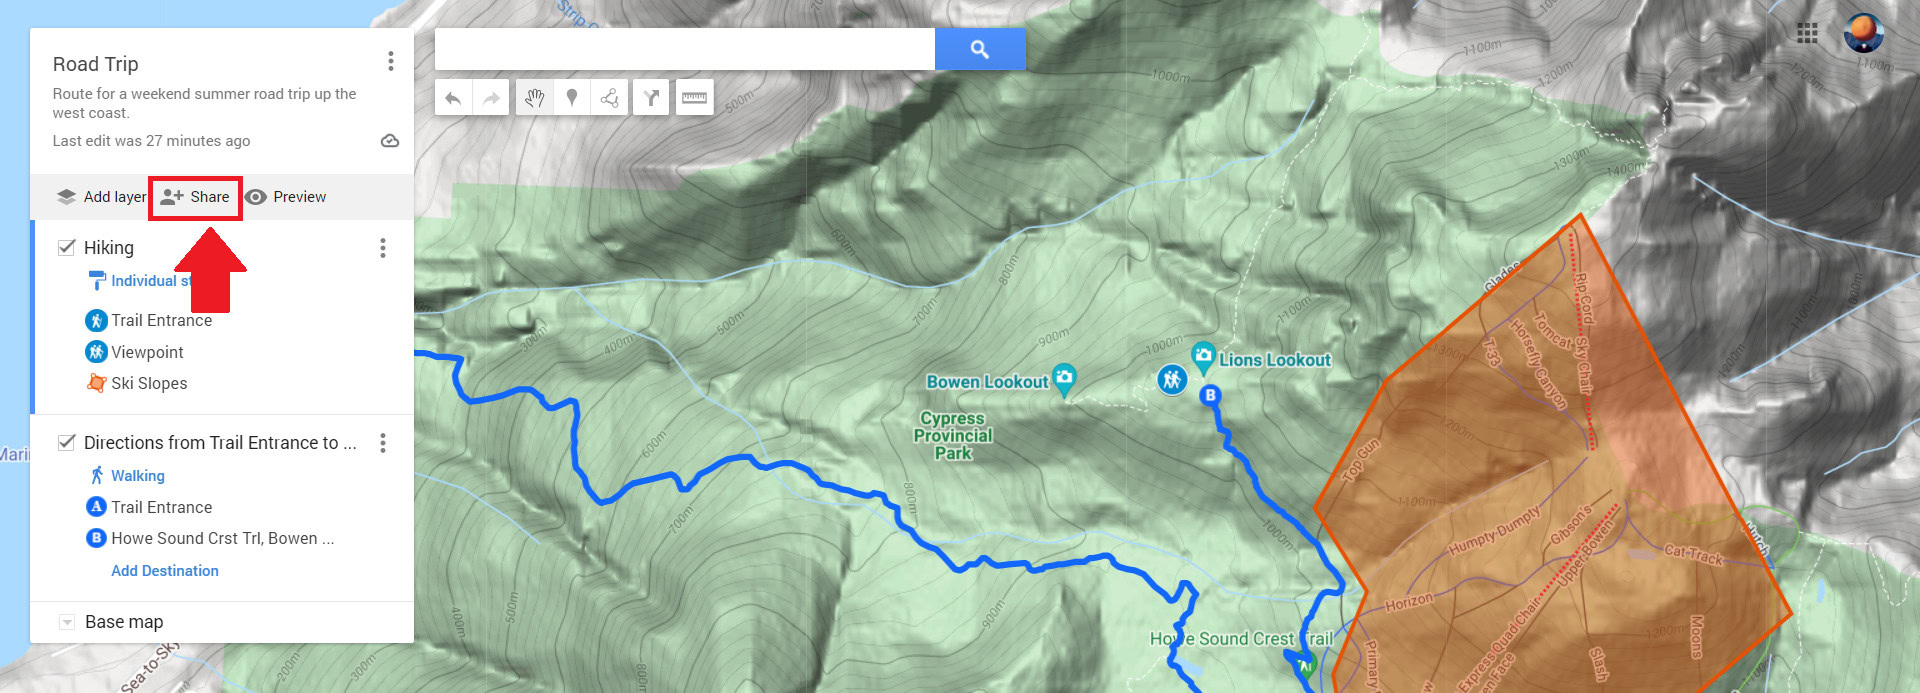 Google Maps share custom map